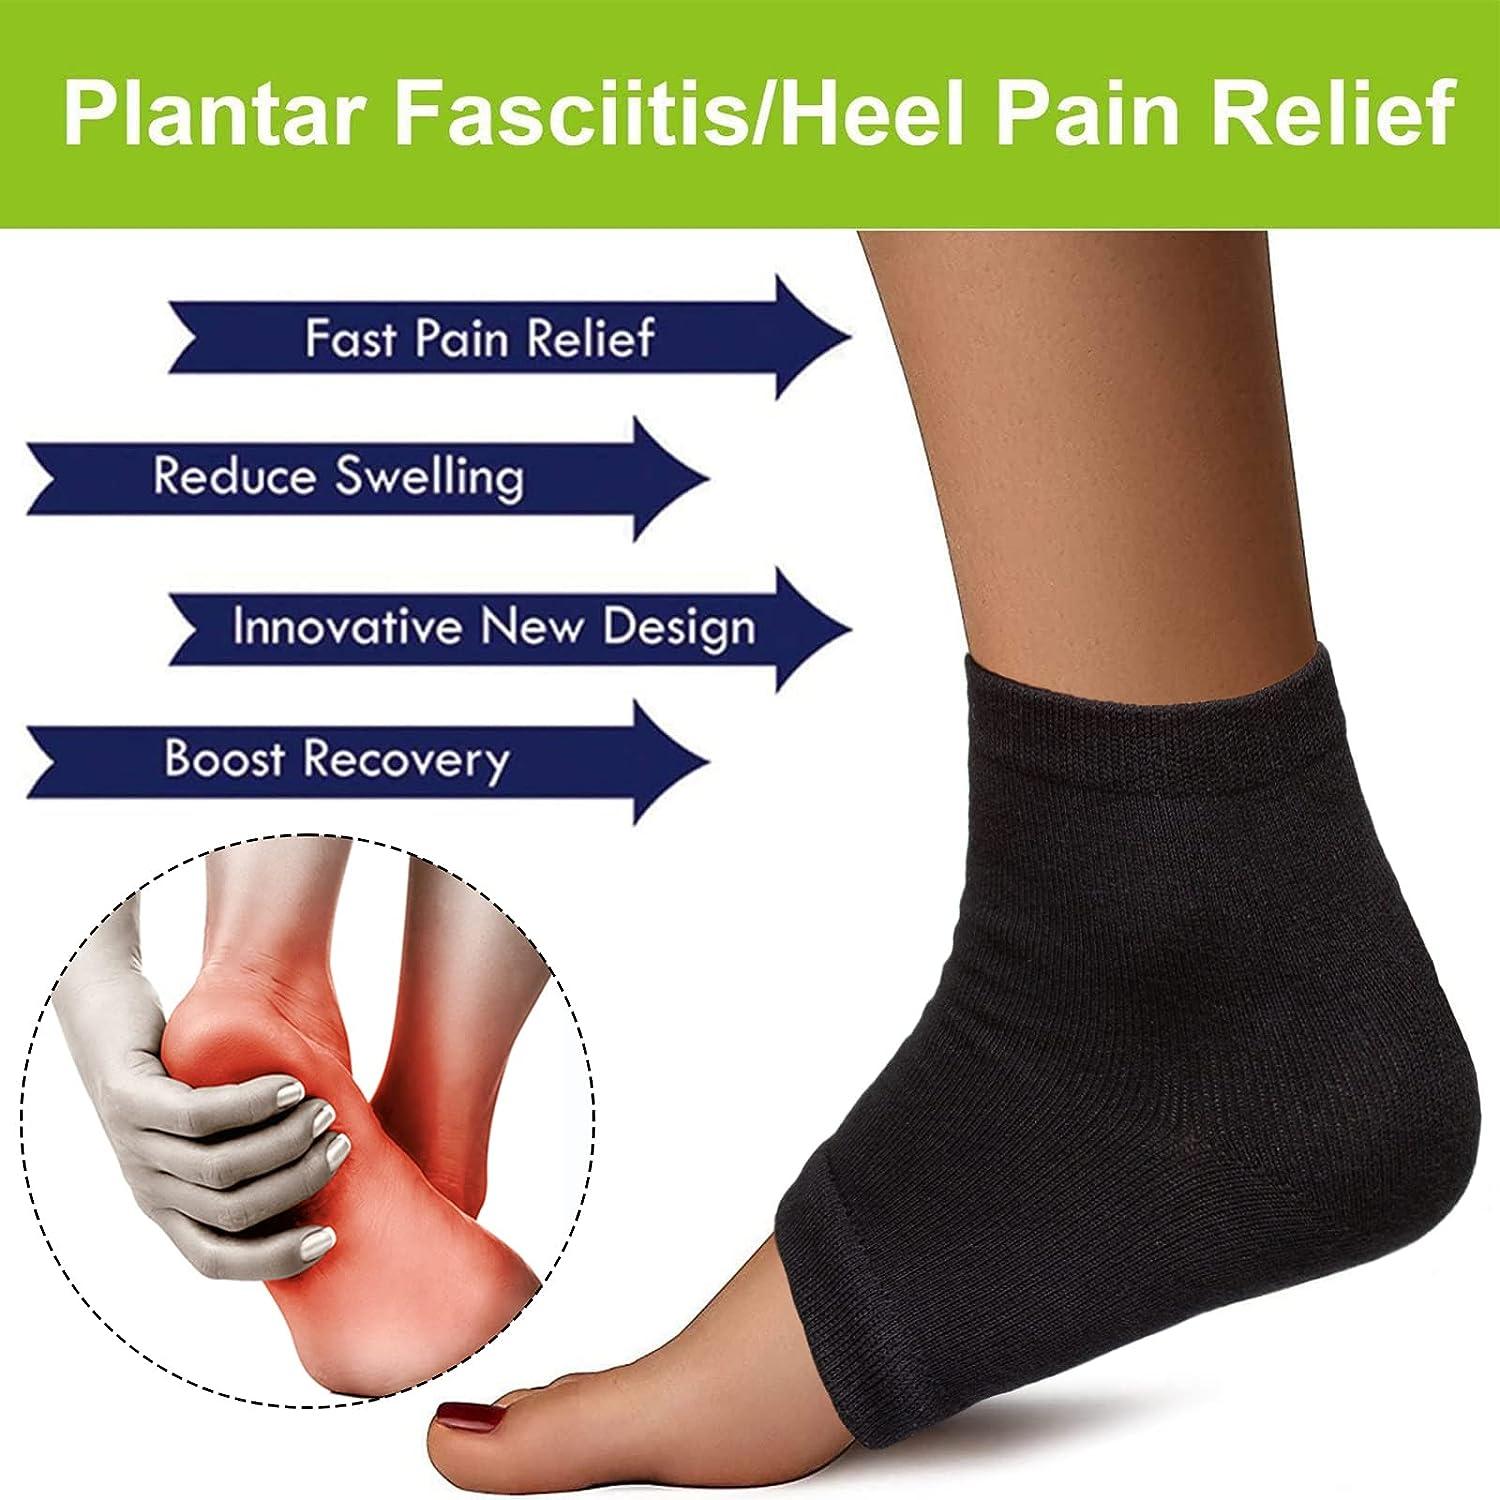 Heel Pain and Plantar Fasciitis Treatment in Wichita, KS